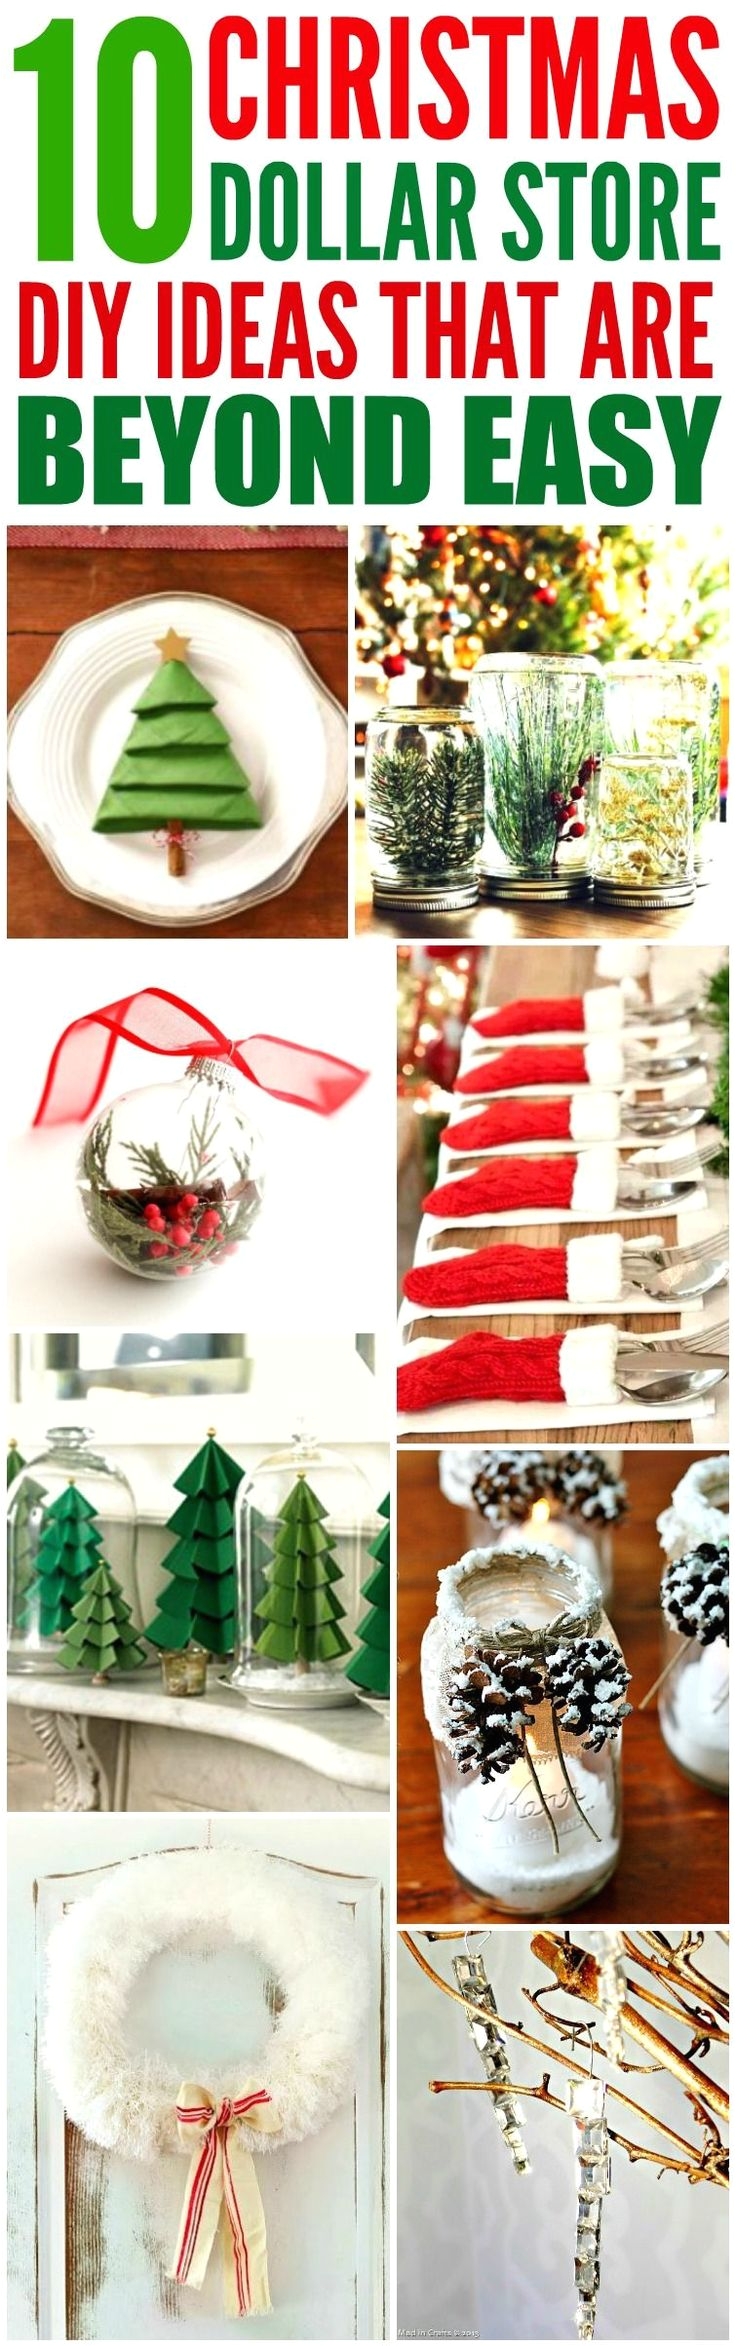 Dollar General Christmas Tree Decorations 60 Best Christmas Decorations Images On Pinterest Diy Christmas